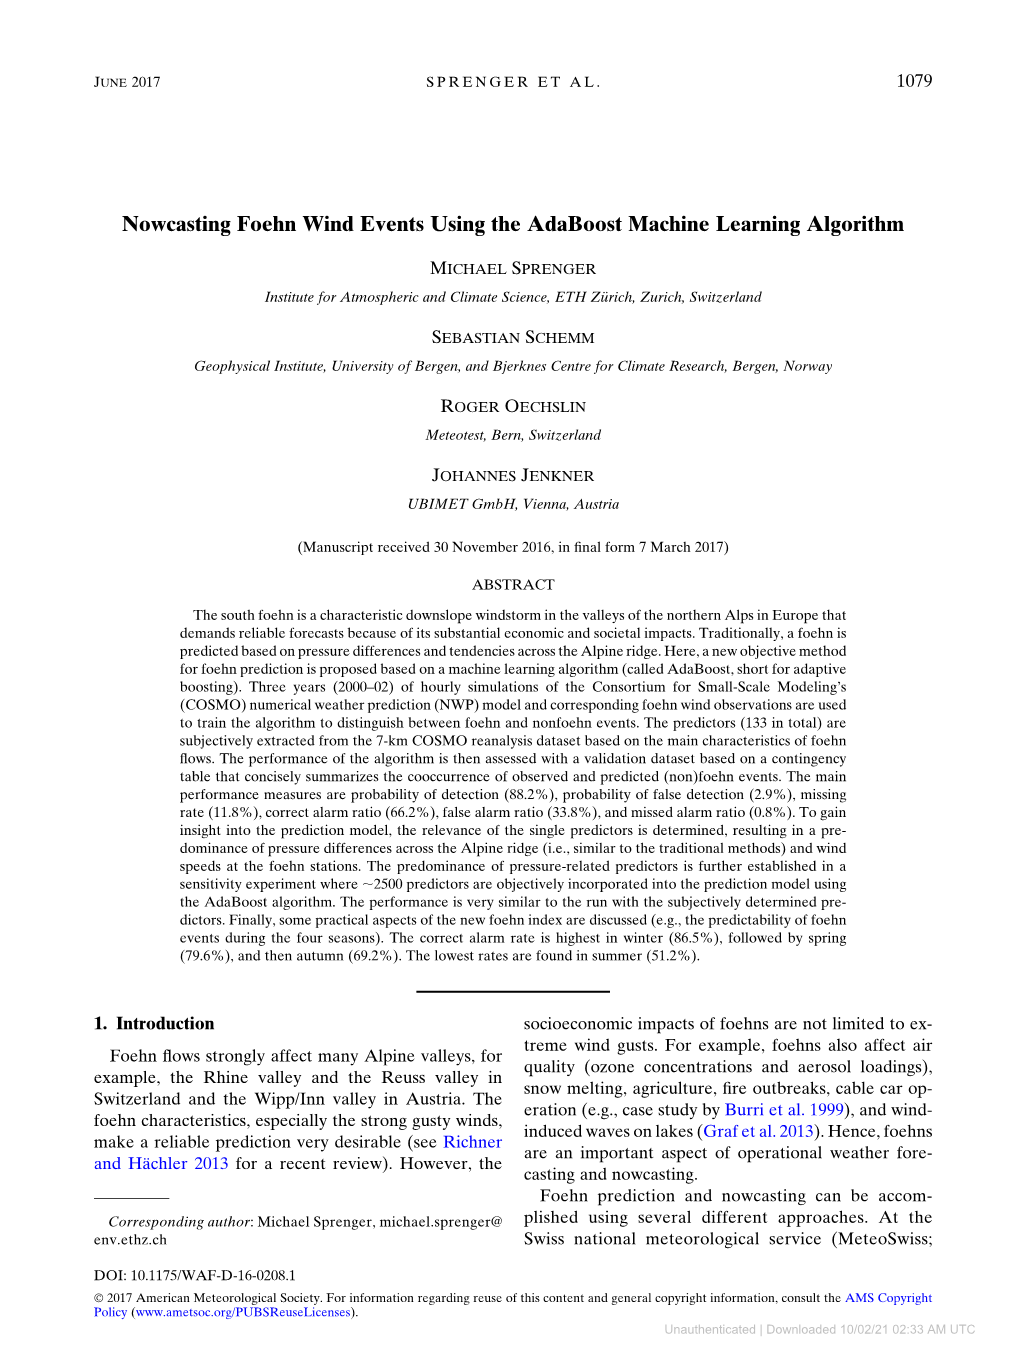 Nowcasting Foehn Wind Events Using the Adaboost Machine Learning Algorithm